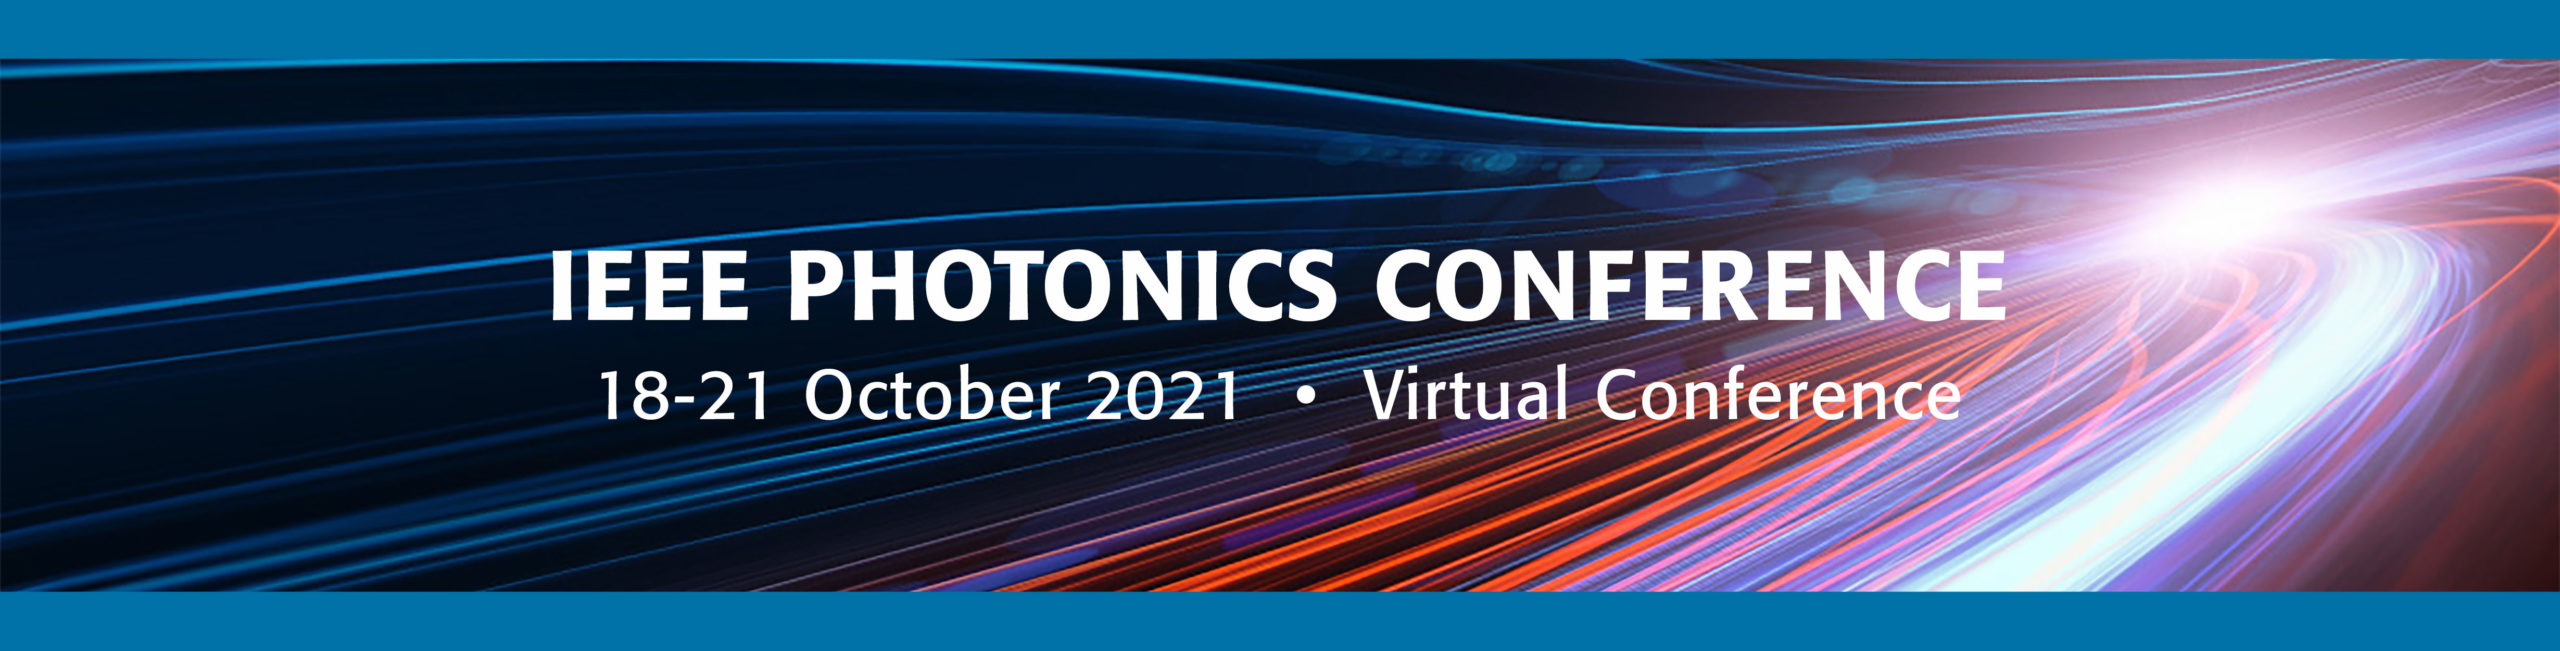 IEEE Photonics Conference Annual Meeting of the IEEE Photonics Society